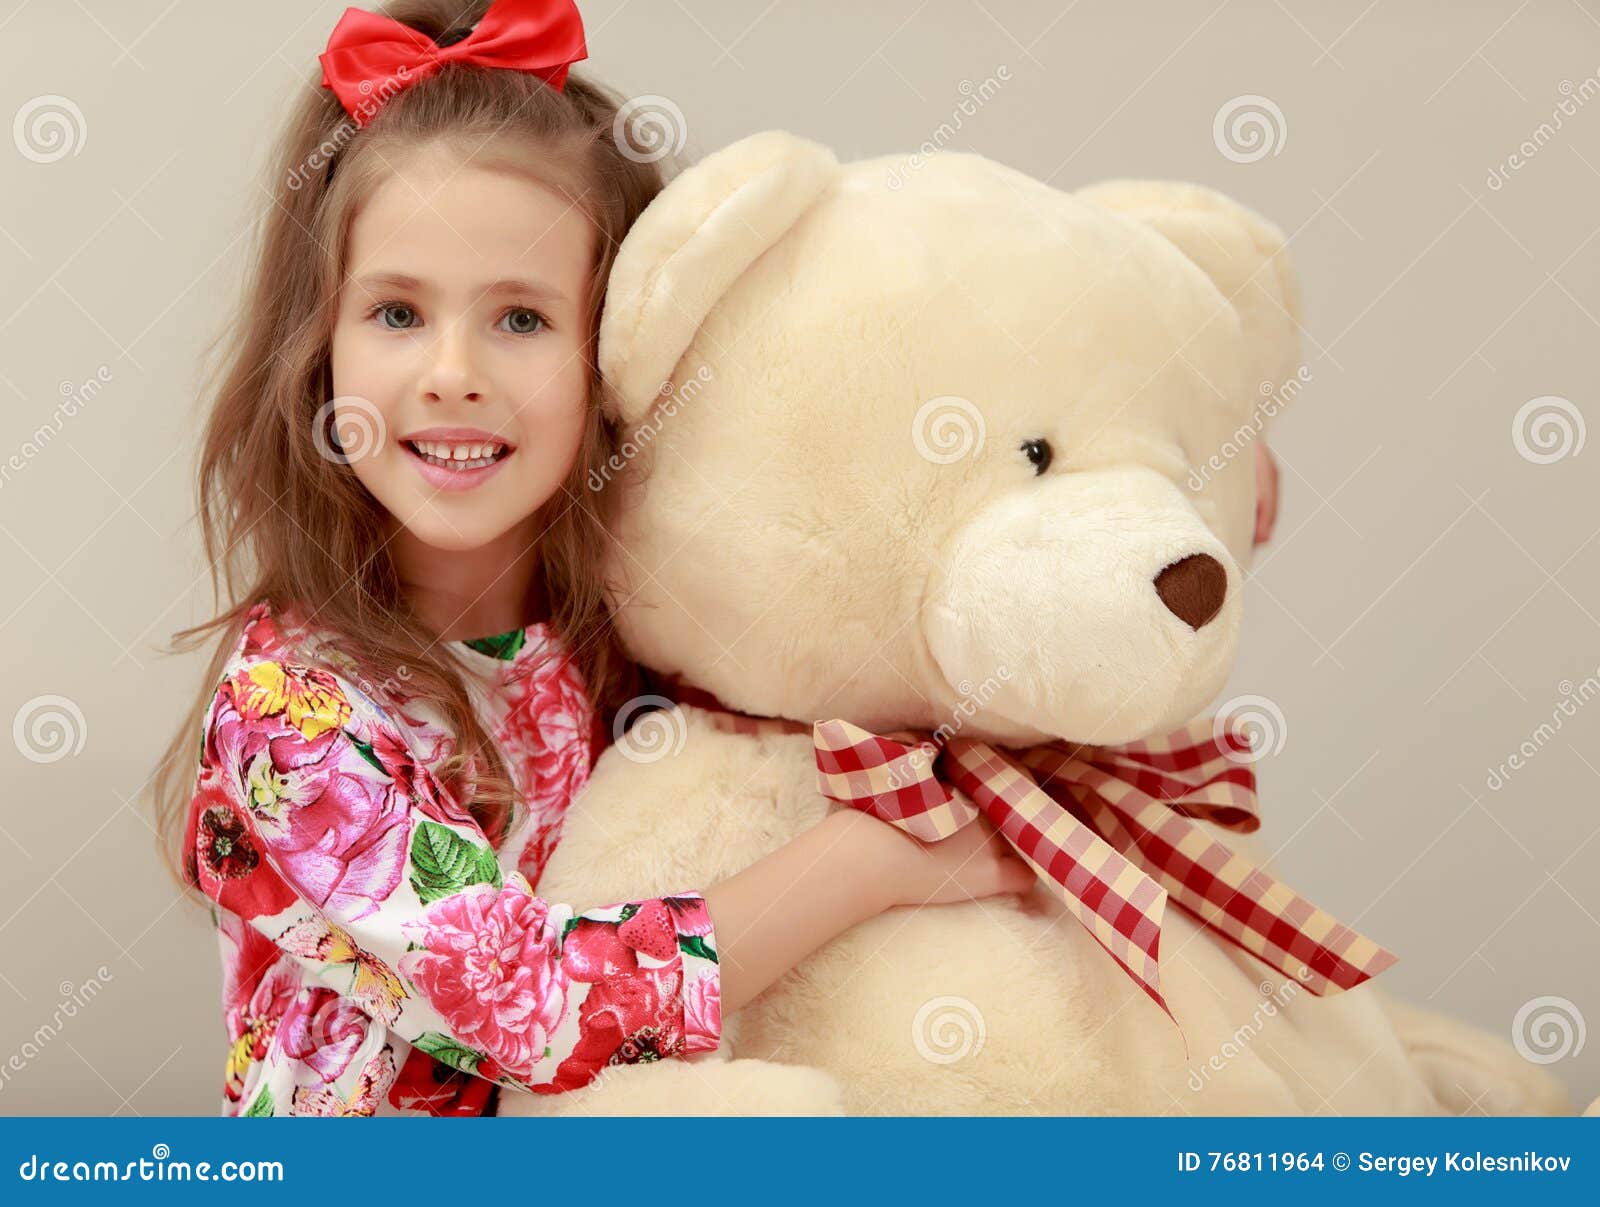 Girl with Teddy bear stock photo. Image of beautiful - 76811964